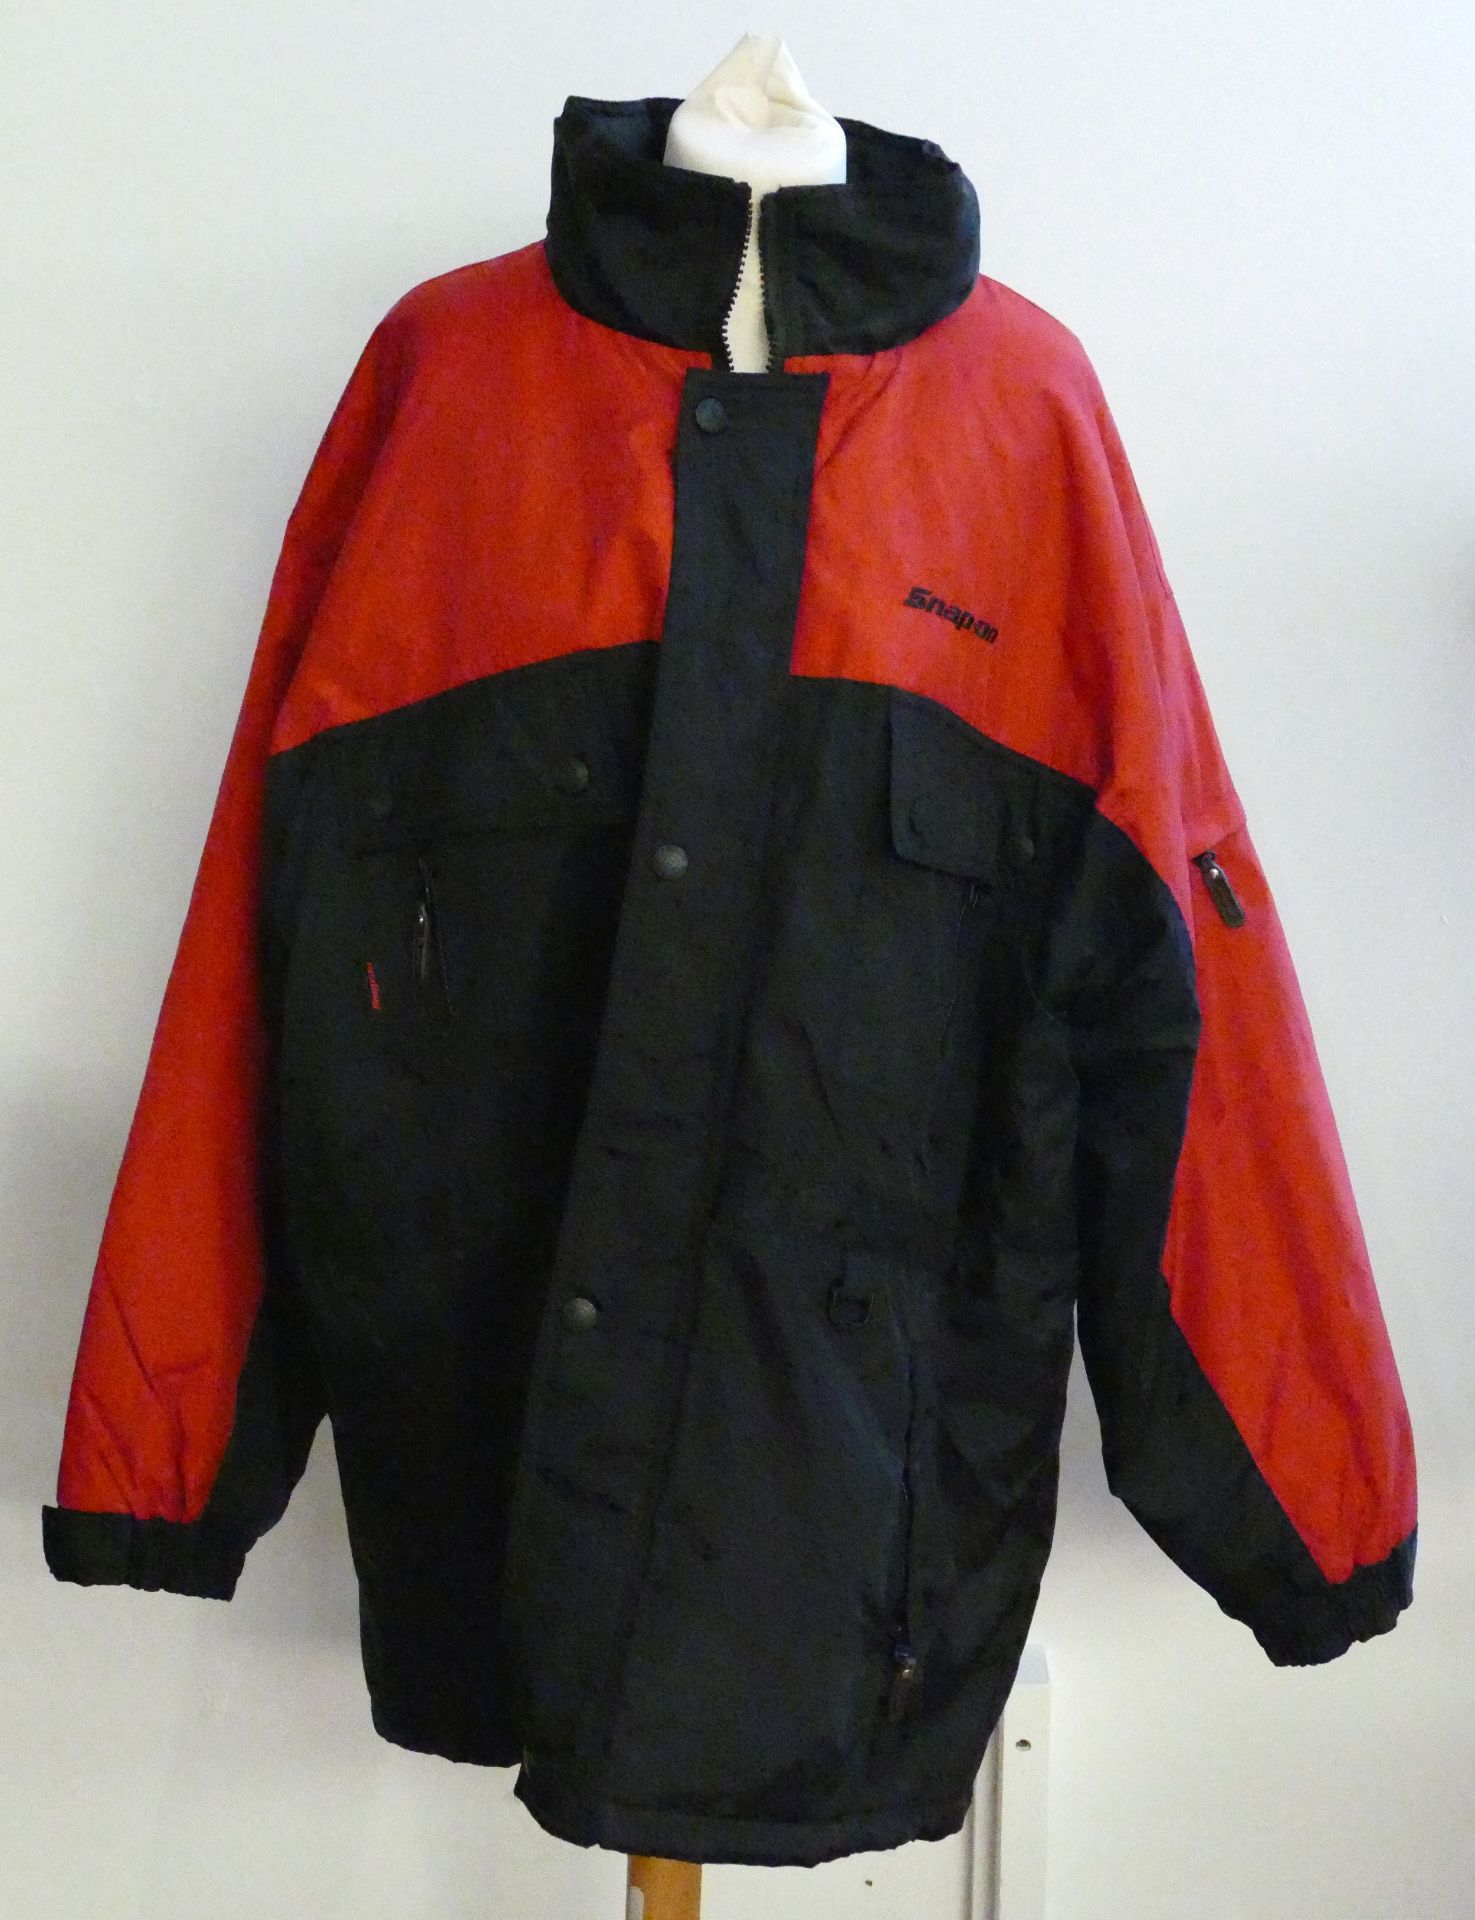 A contemporary Snap-on gentlemens waterproof jacket